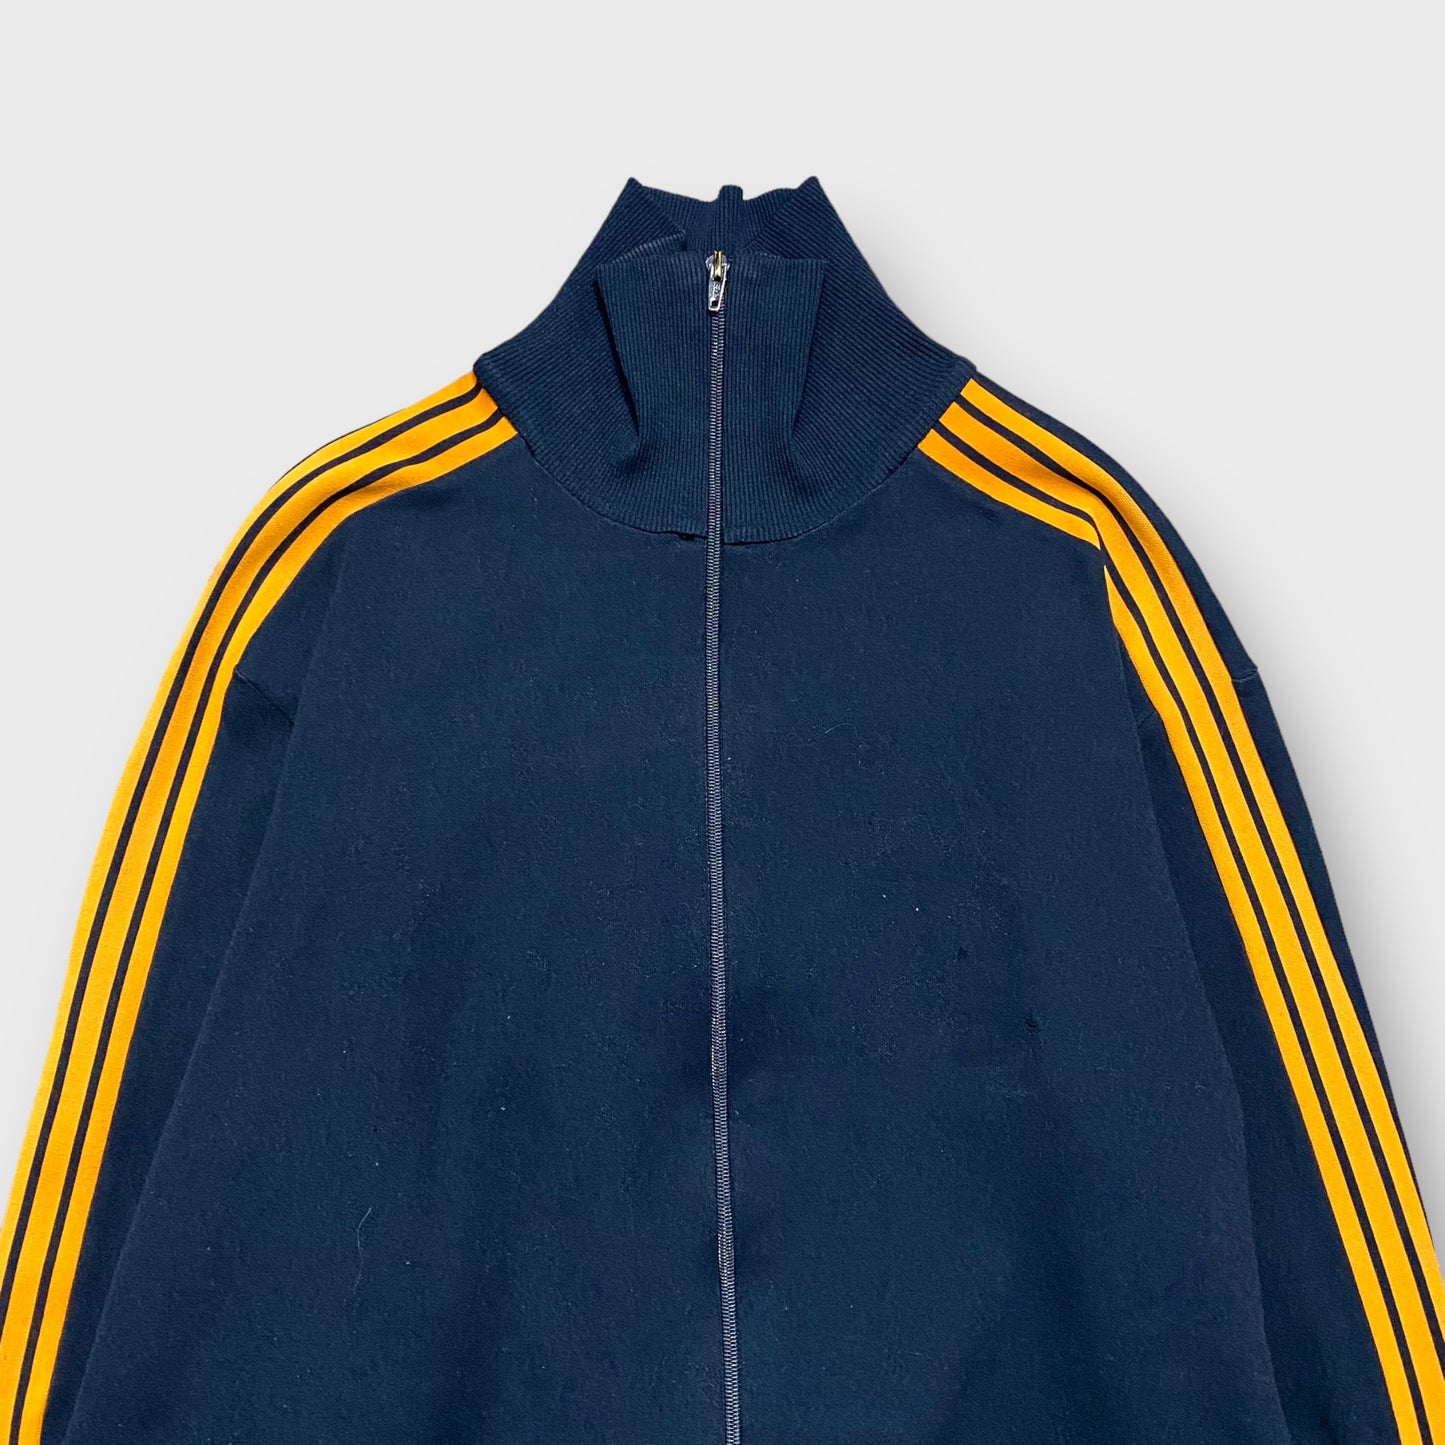 70-80's "adidas" Track jacket